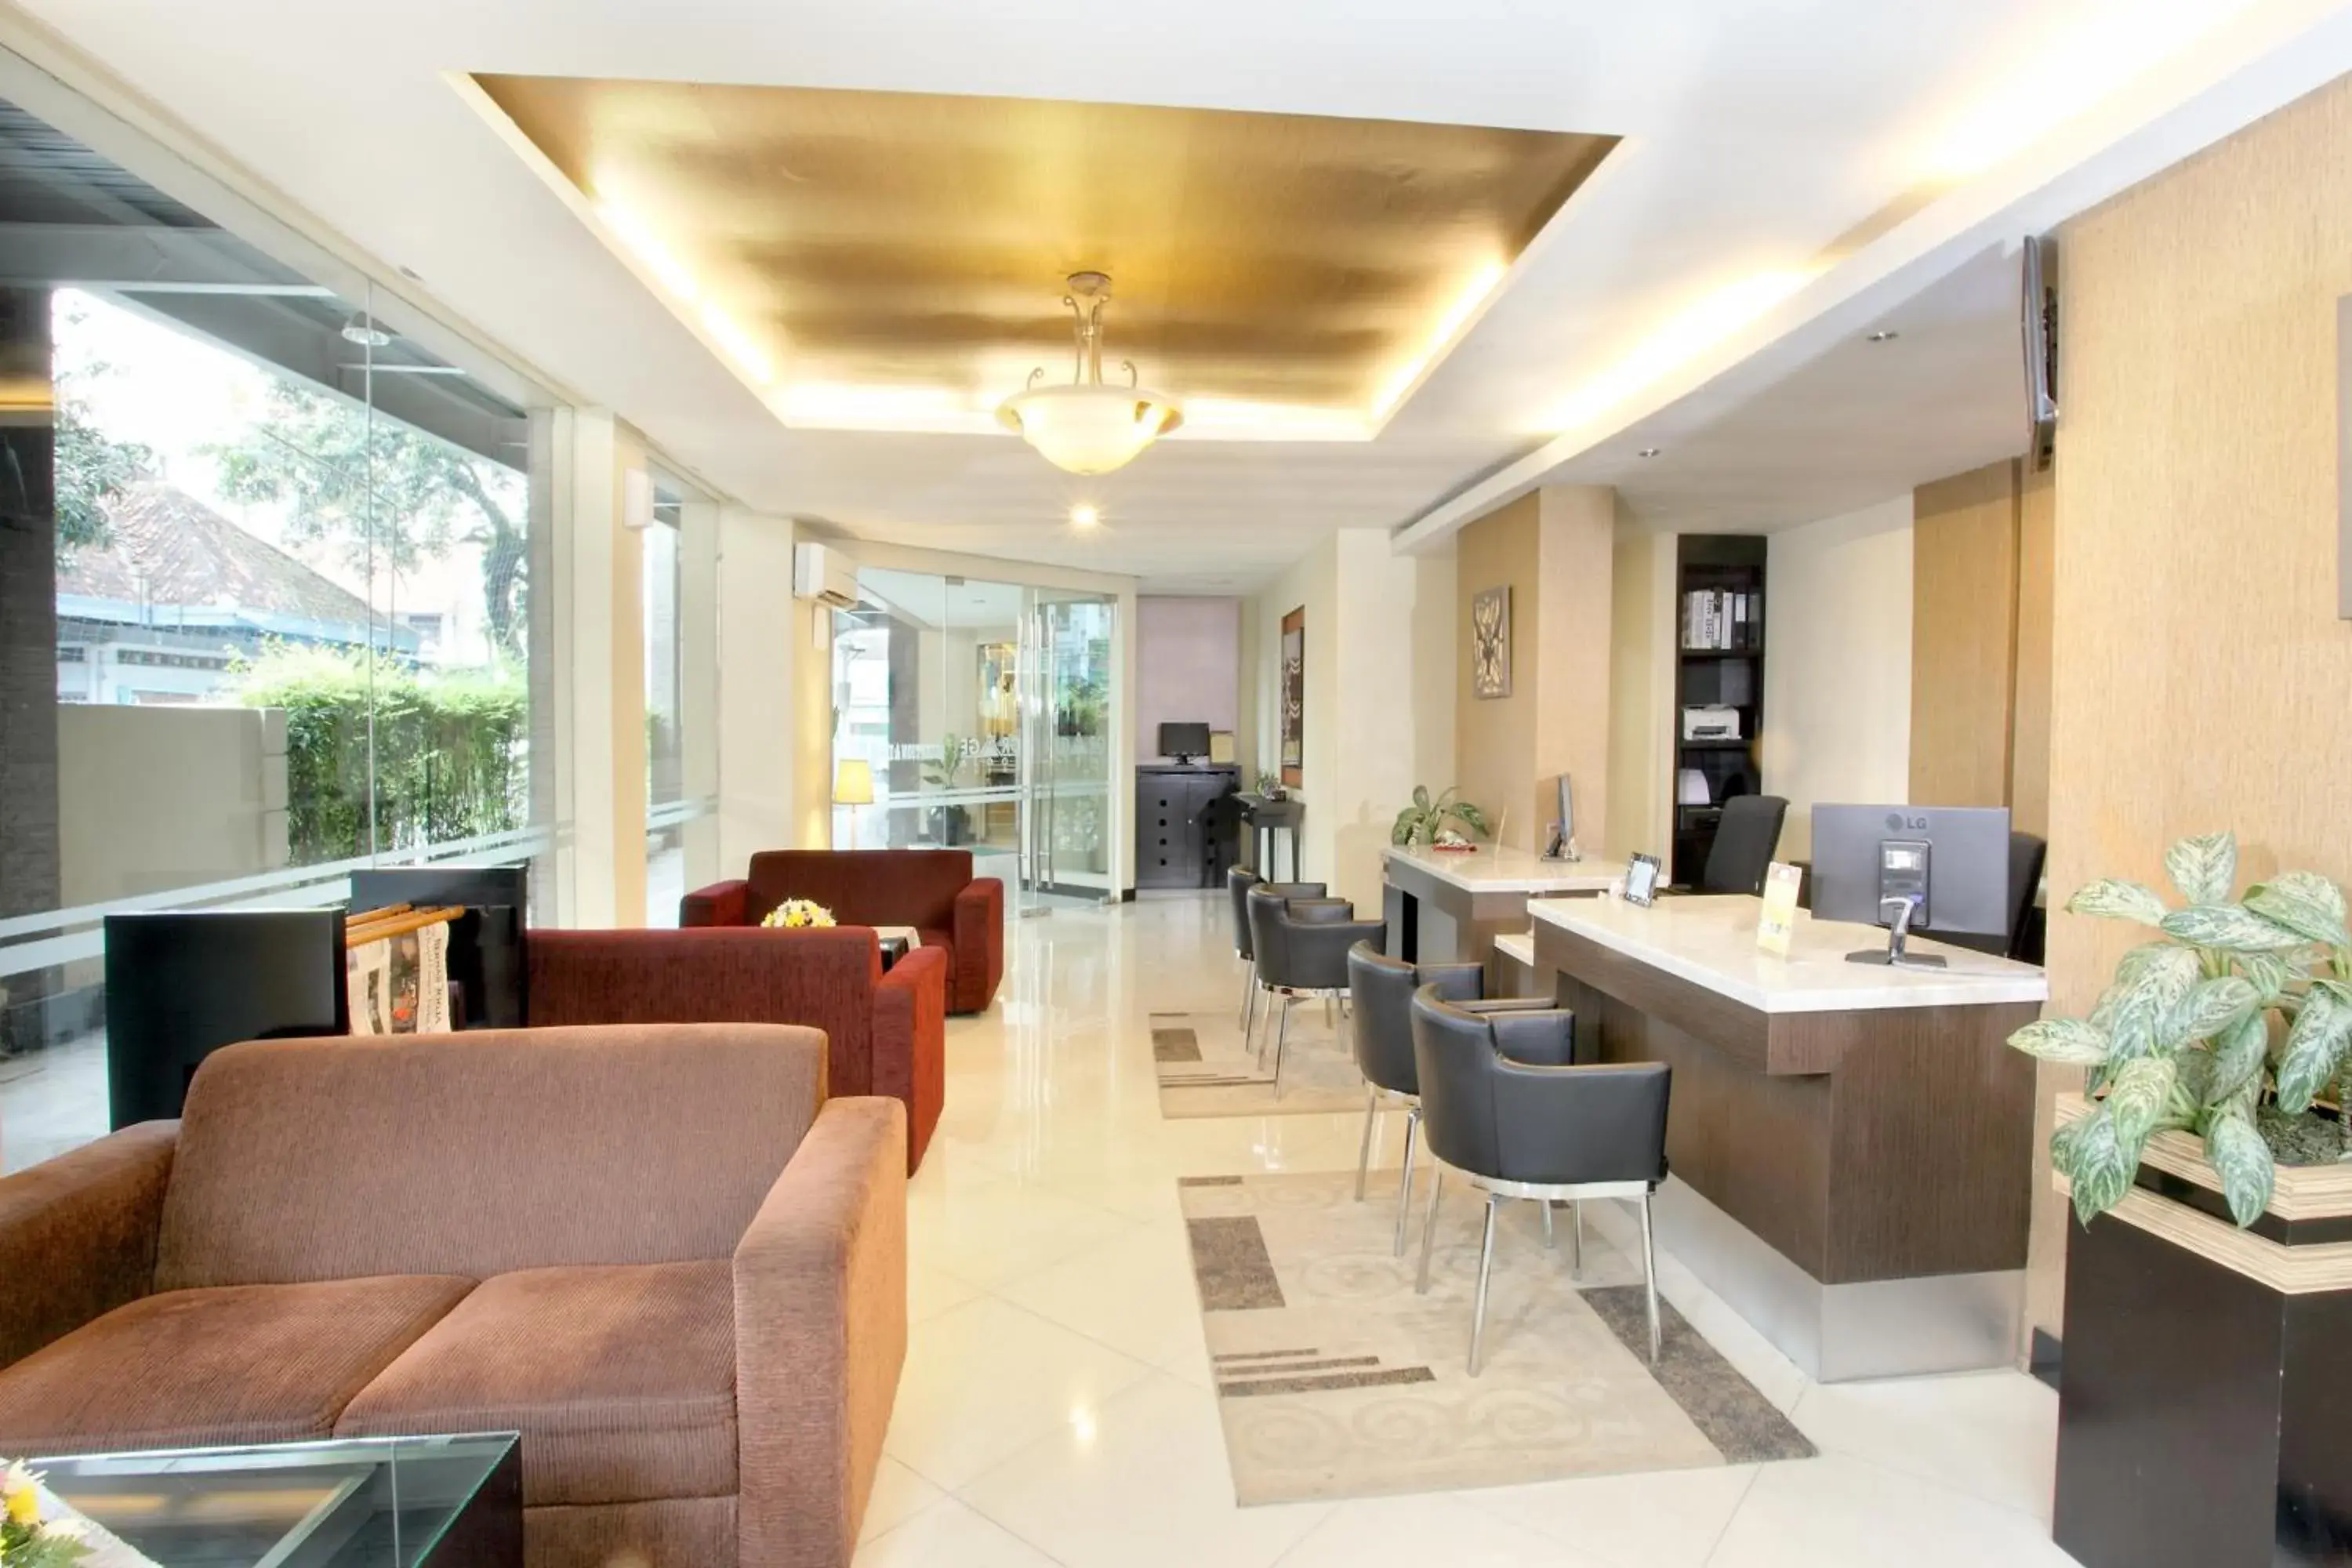 Lobby or reception in Grage Jogja Hotel